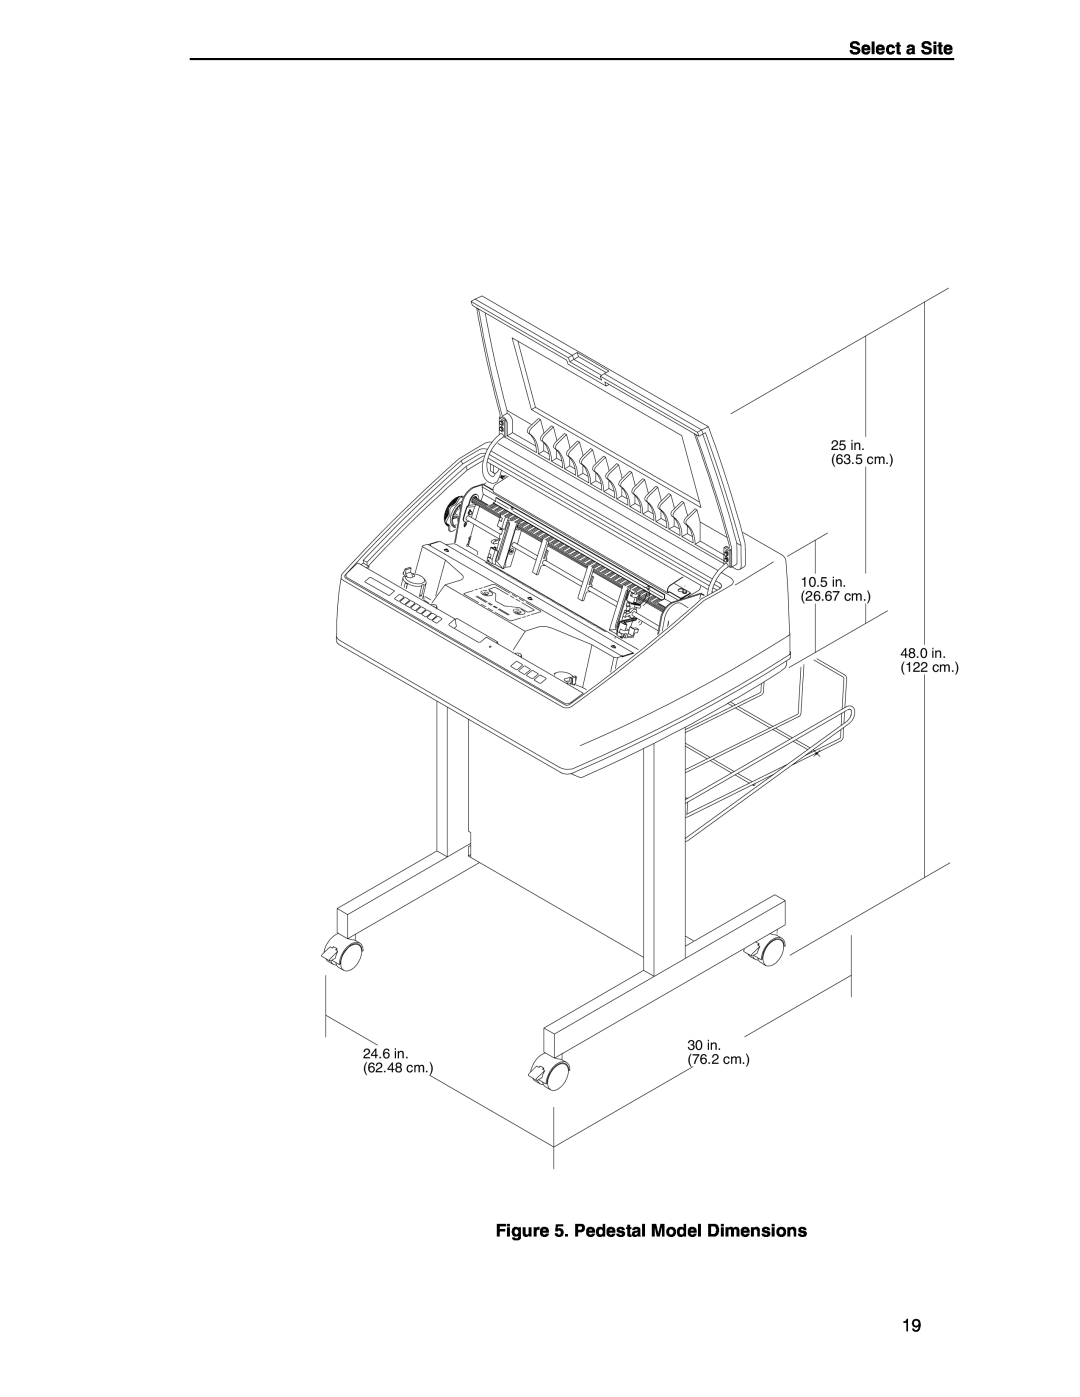 Compaq P5000 Series setup guide Select a Site, Pedestal Model Dimensions, 62.48 cm 